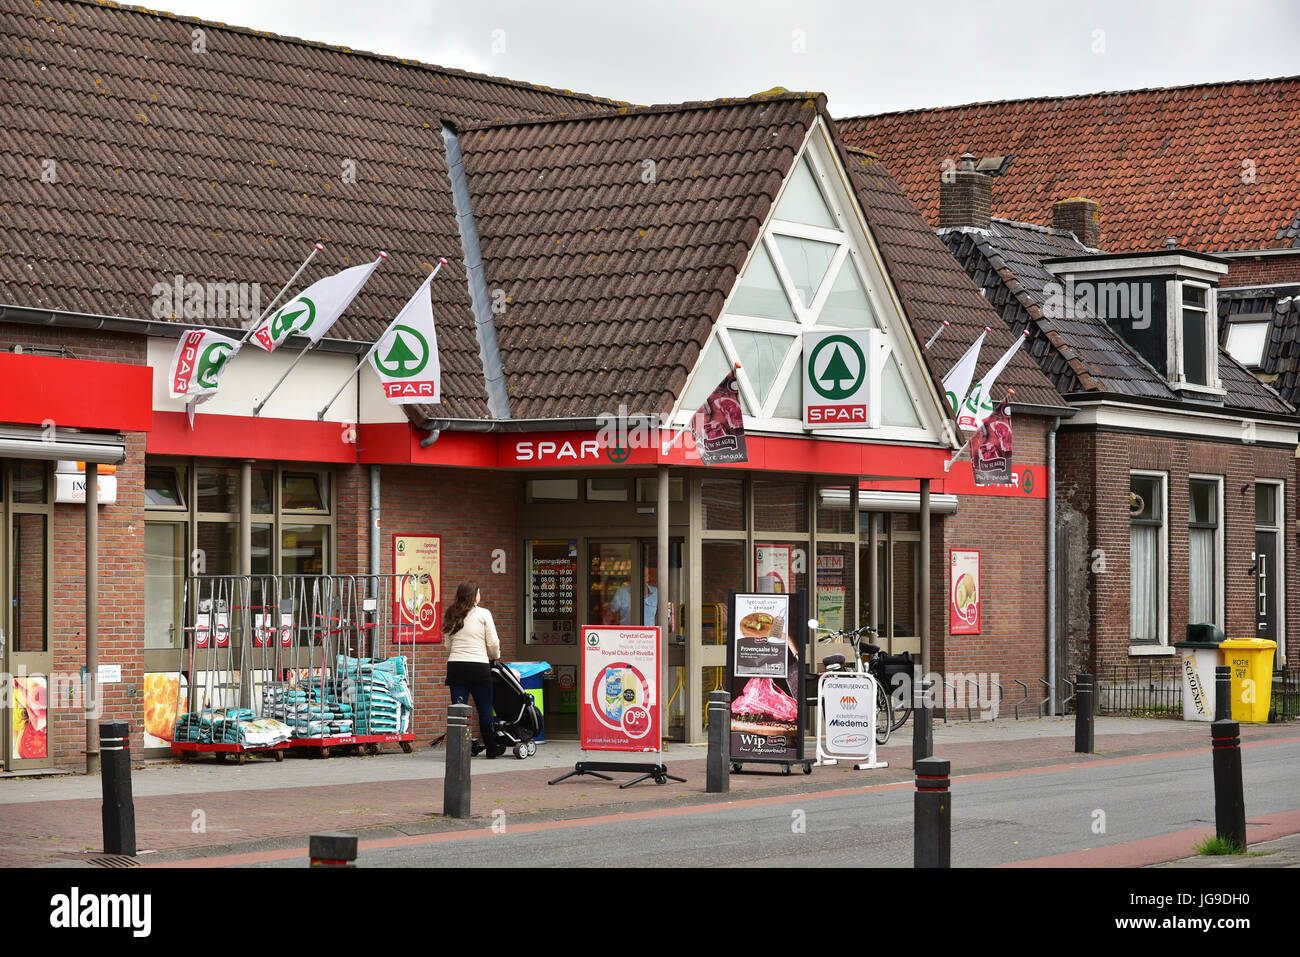 SPAR supermarket in The Netherlands Stock Photo